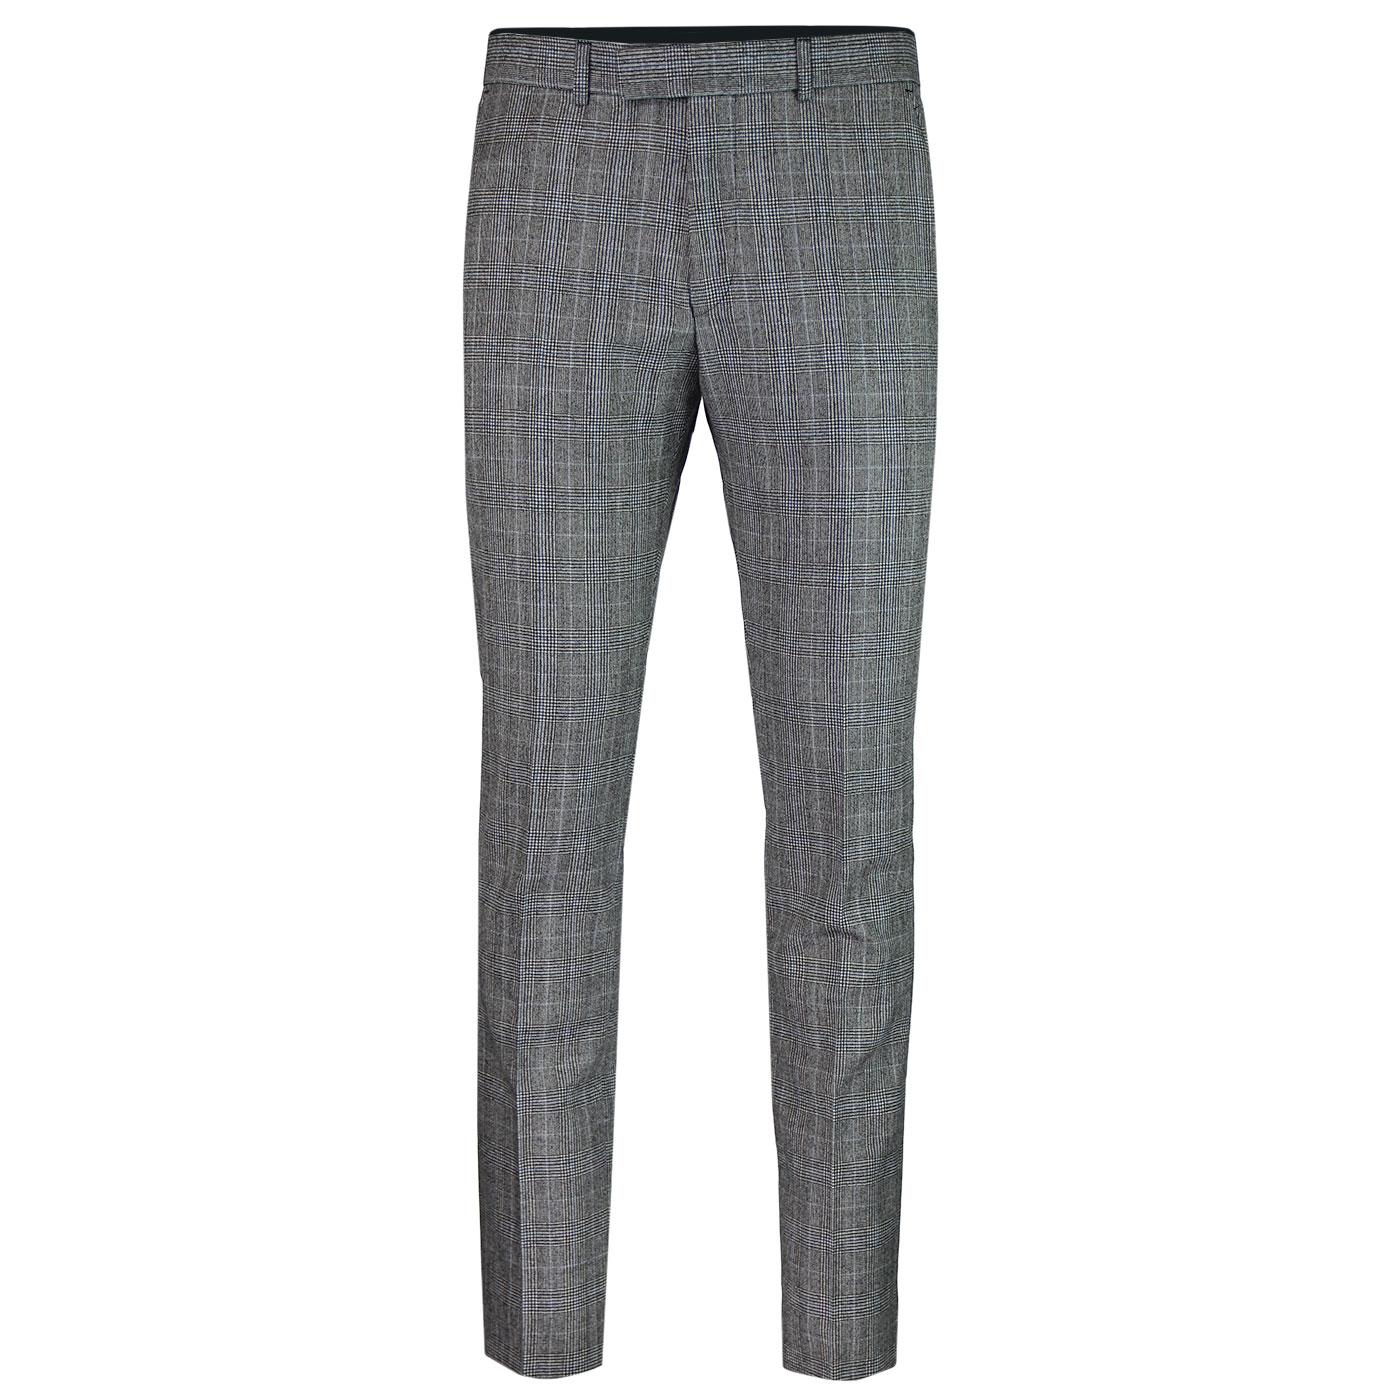 BEN SHERMAN Tailoring Mod POW Check Suit Trousers